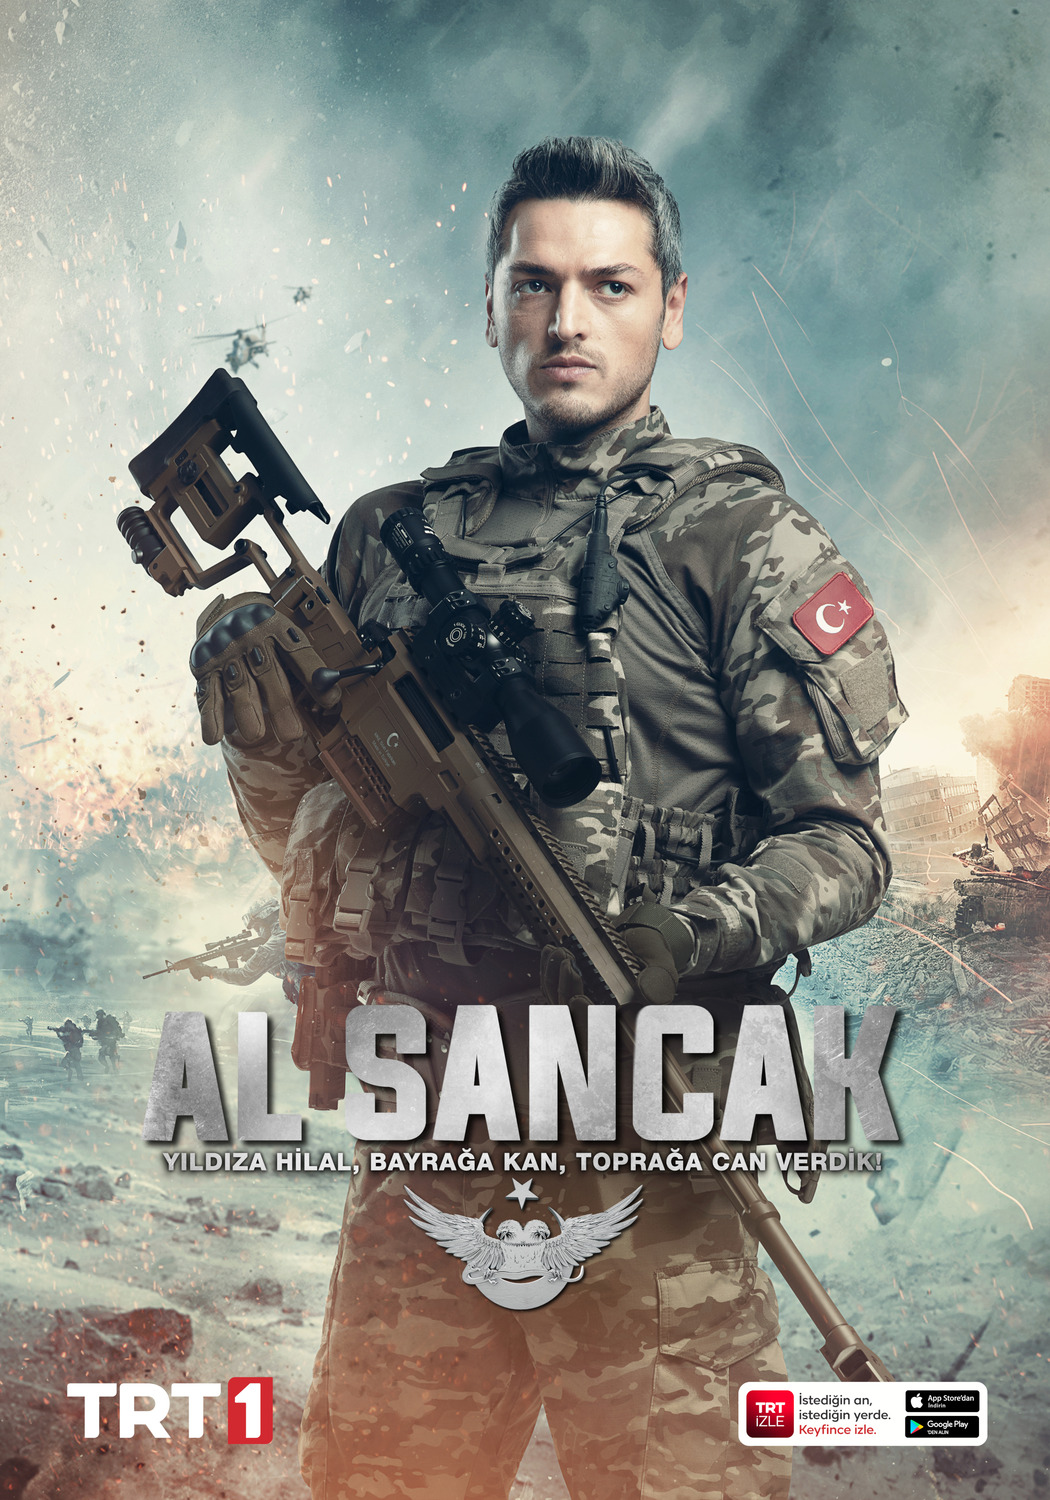 Extra Large TV Poster Image for Al Sancak (#10 of 20)